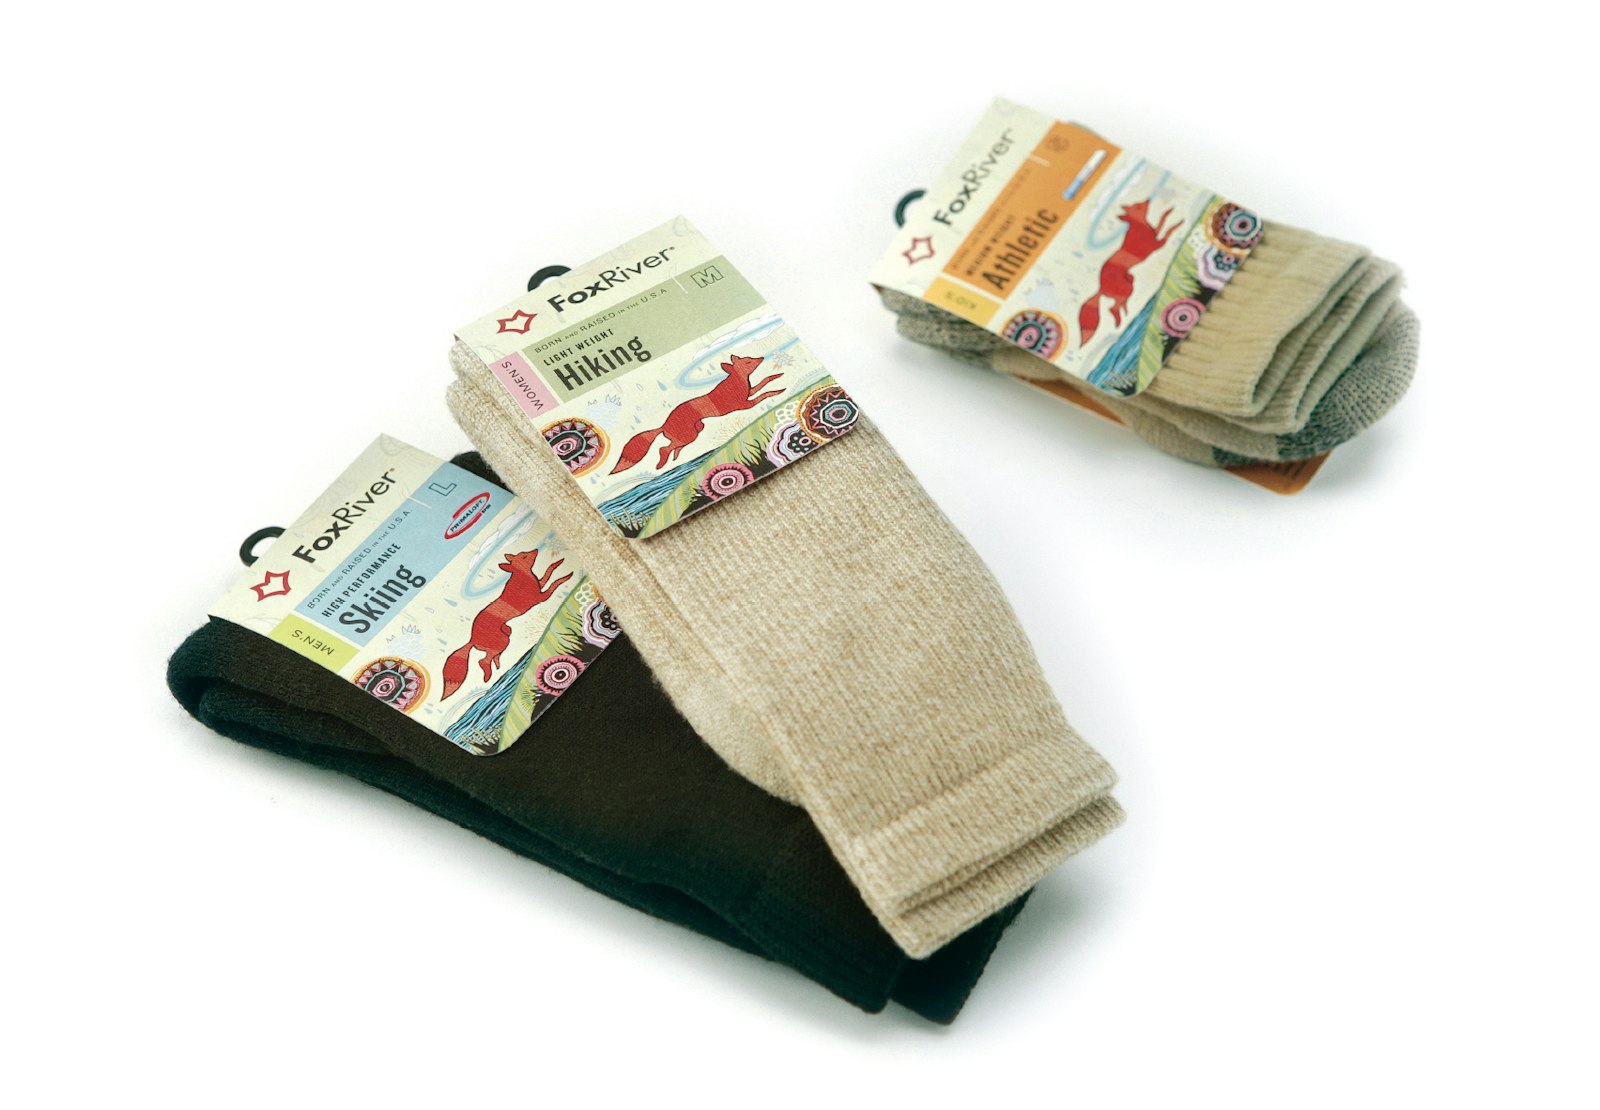 Three Fox River Socks packaging designs.